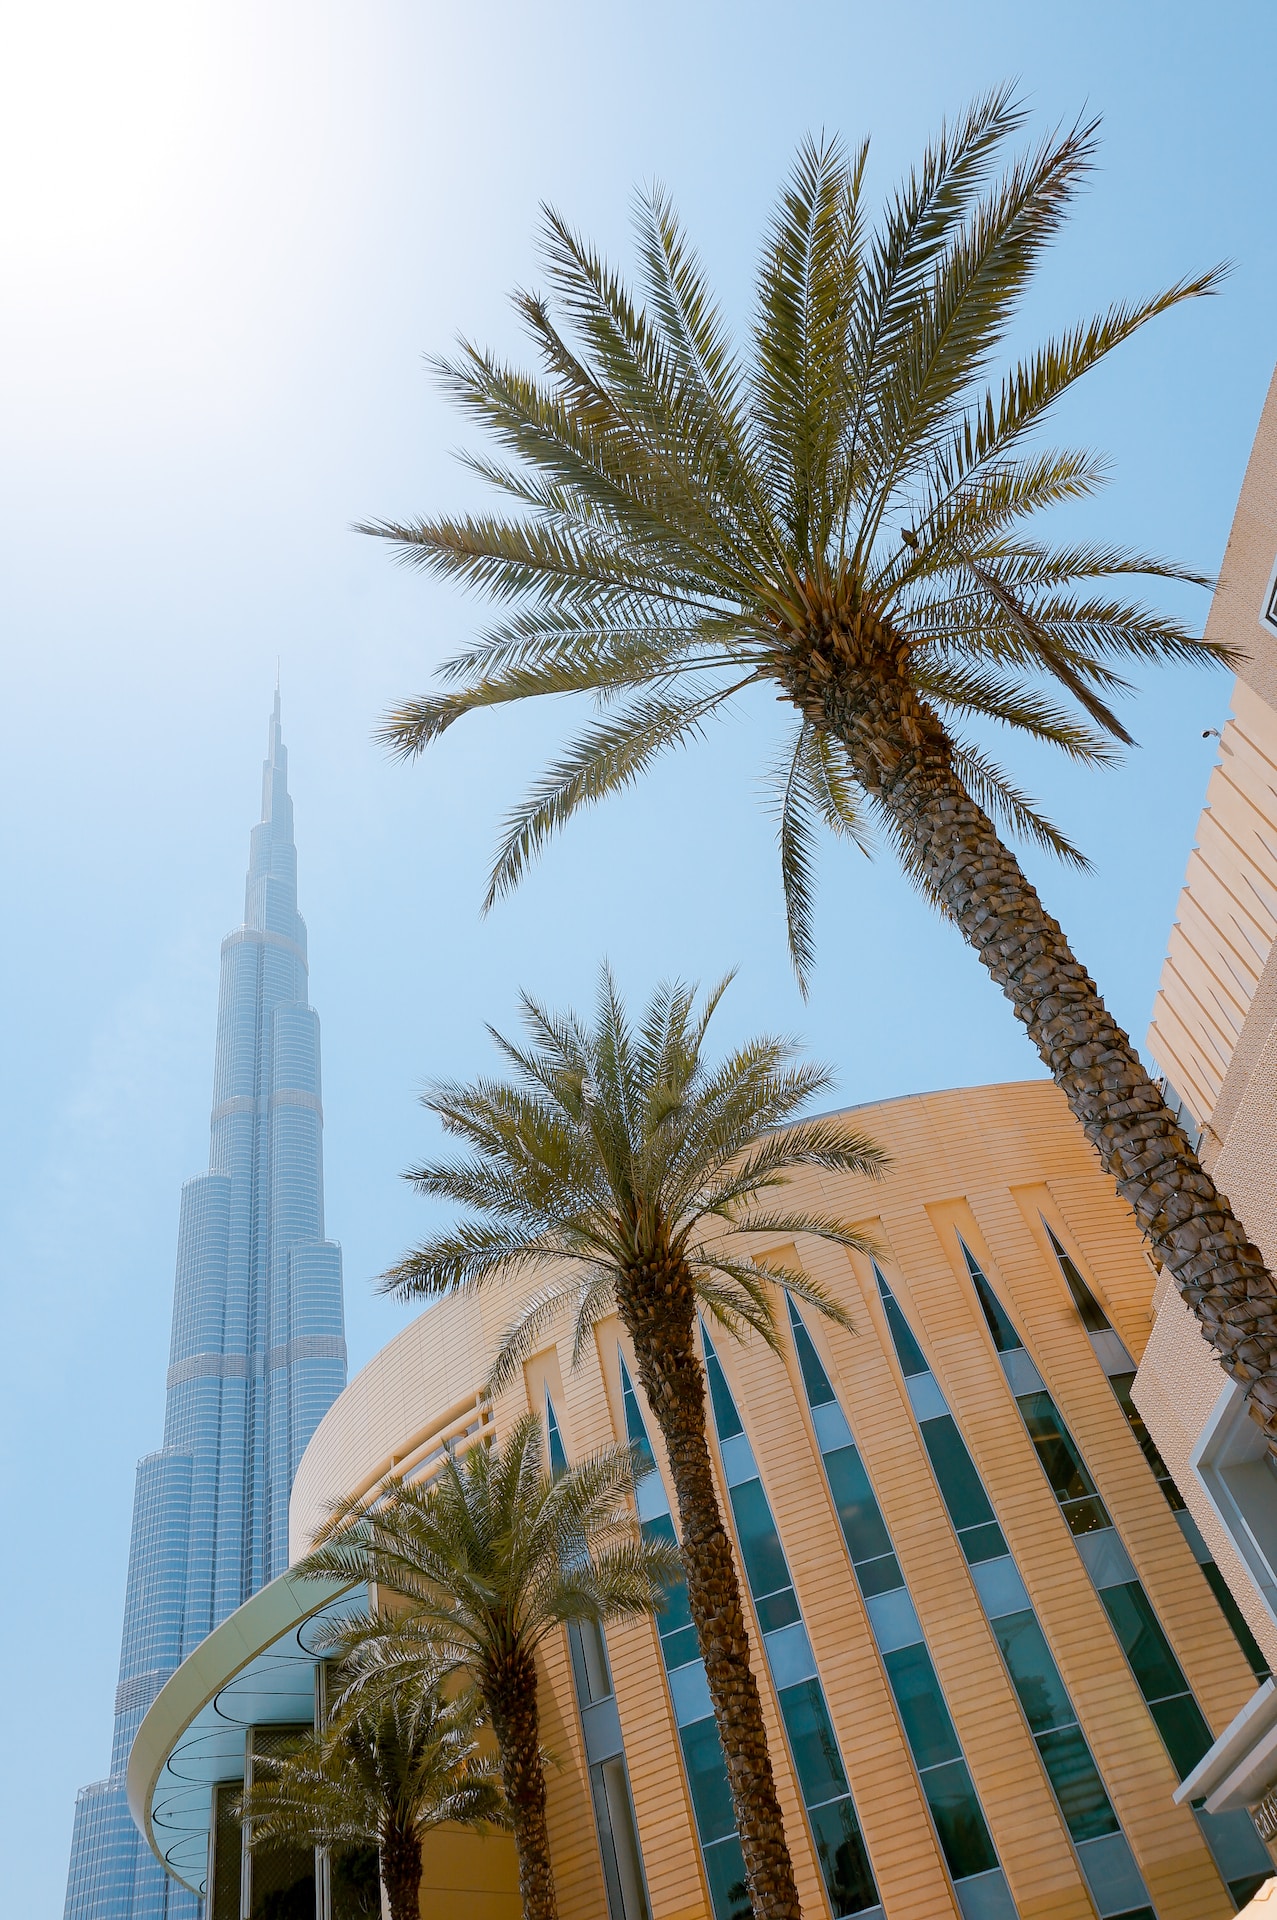 Is 25000 dirham a good salary in Dubai?